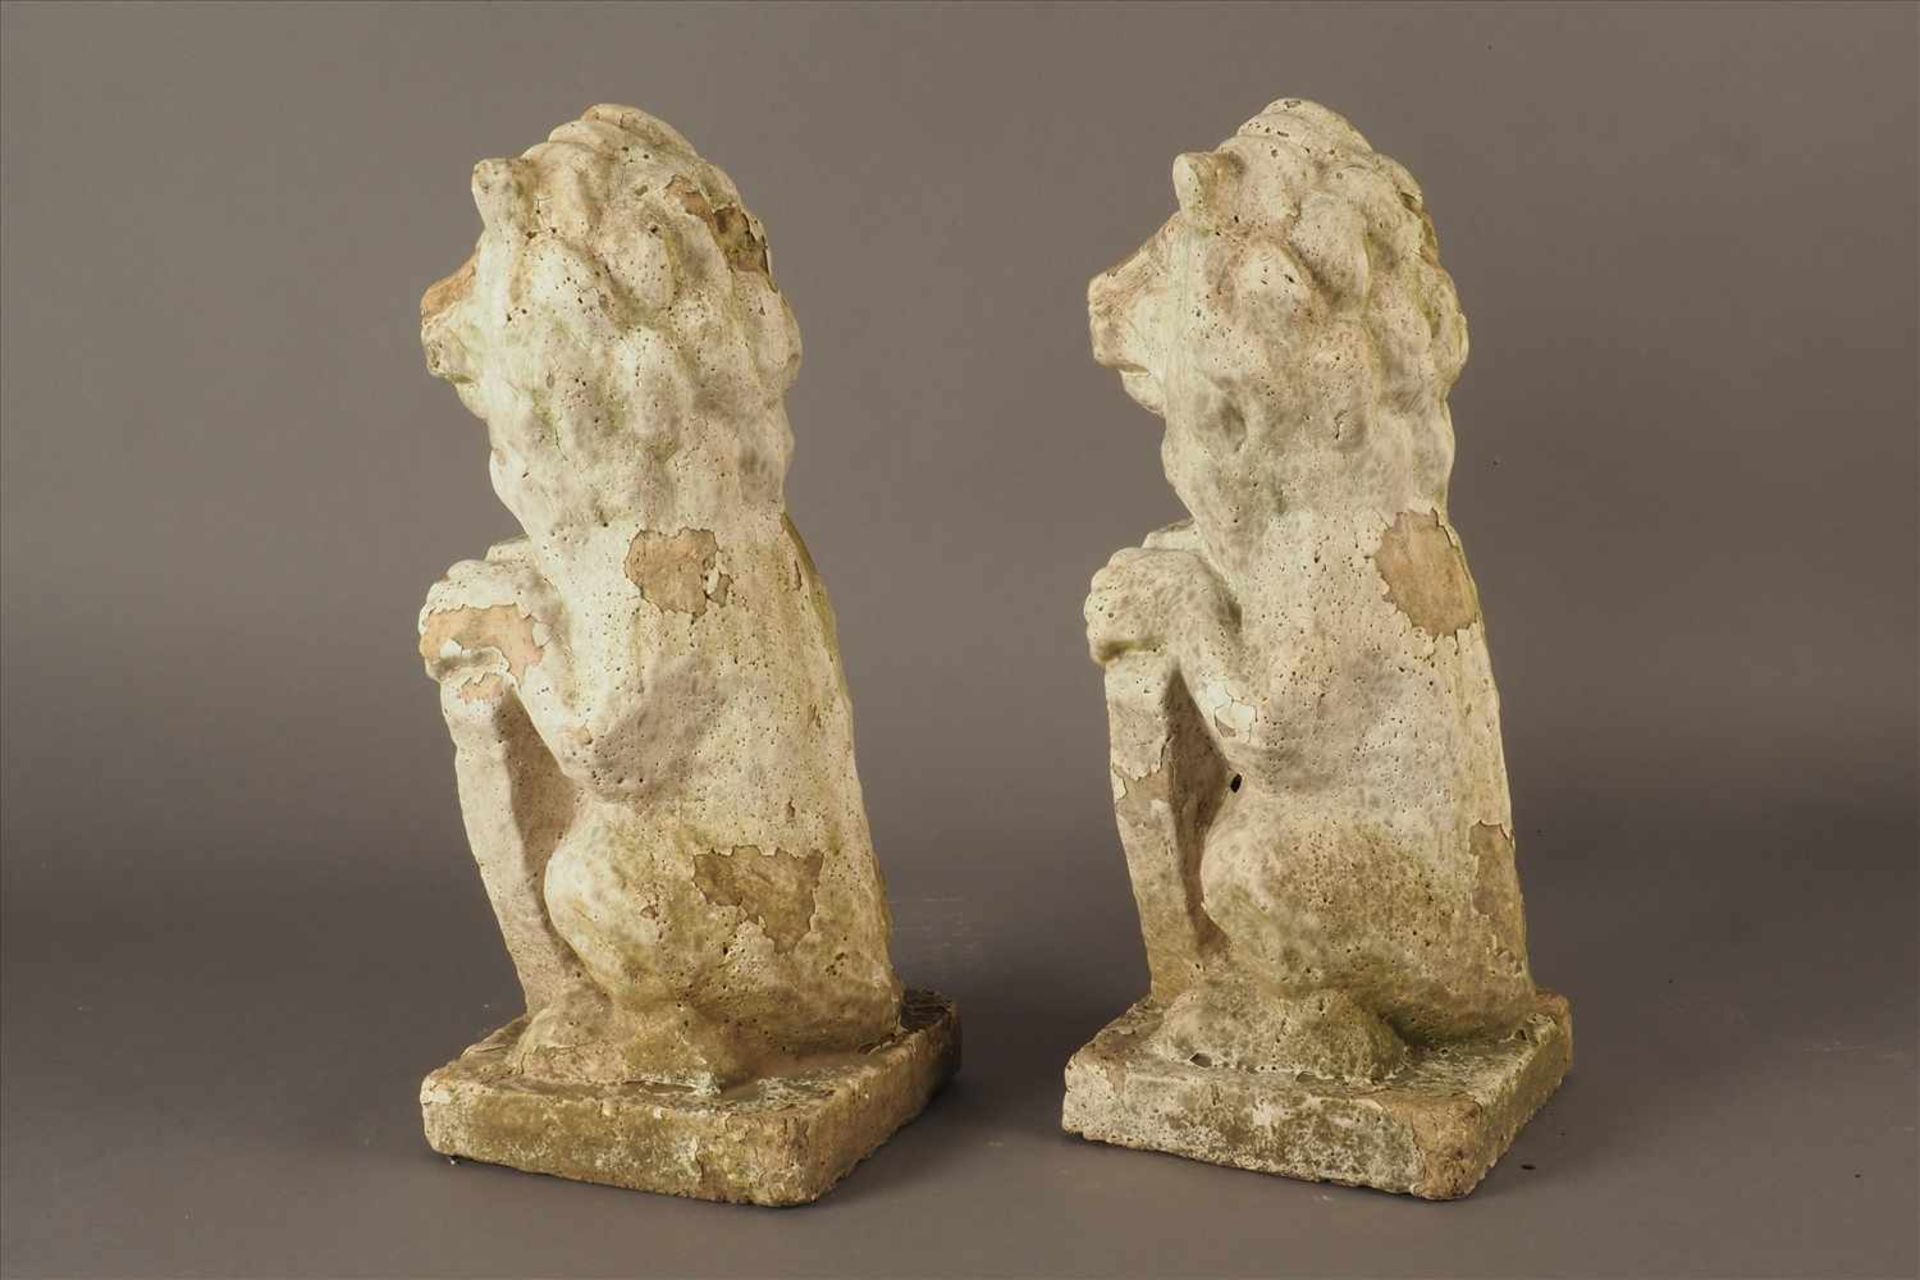 Paar Wappenhalter-Löwen Terracota, weiß gefasst, verwittert Maße: H46cm. - Image 2 of 3